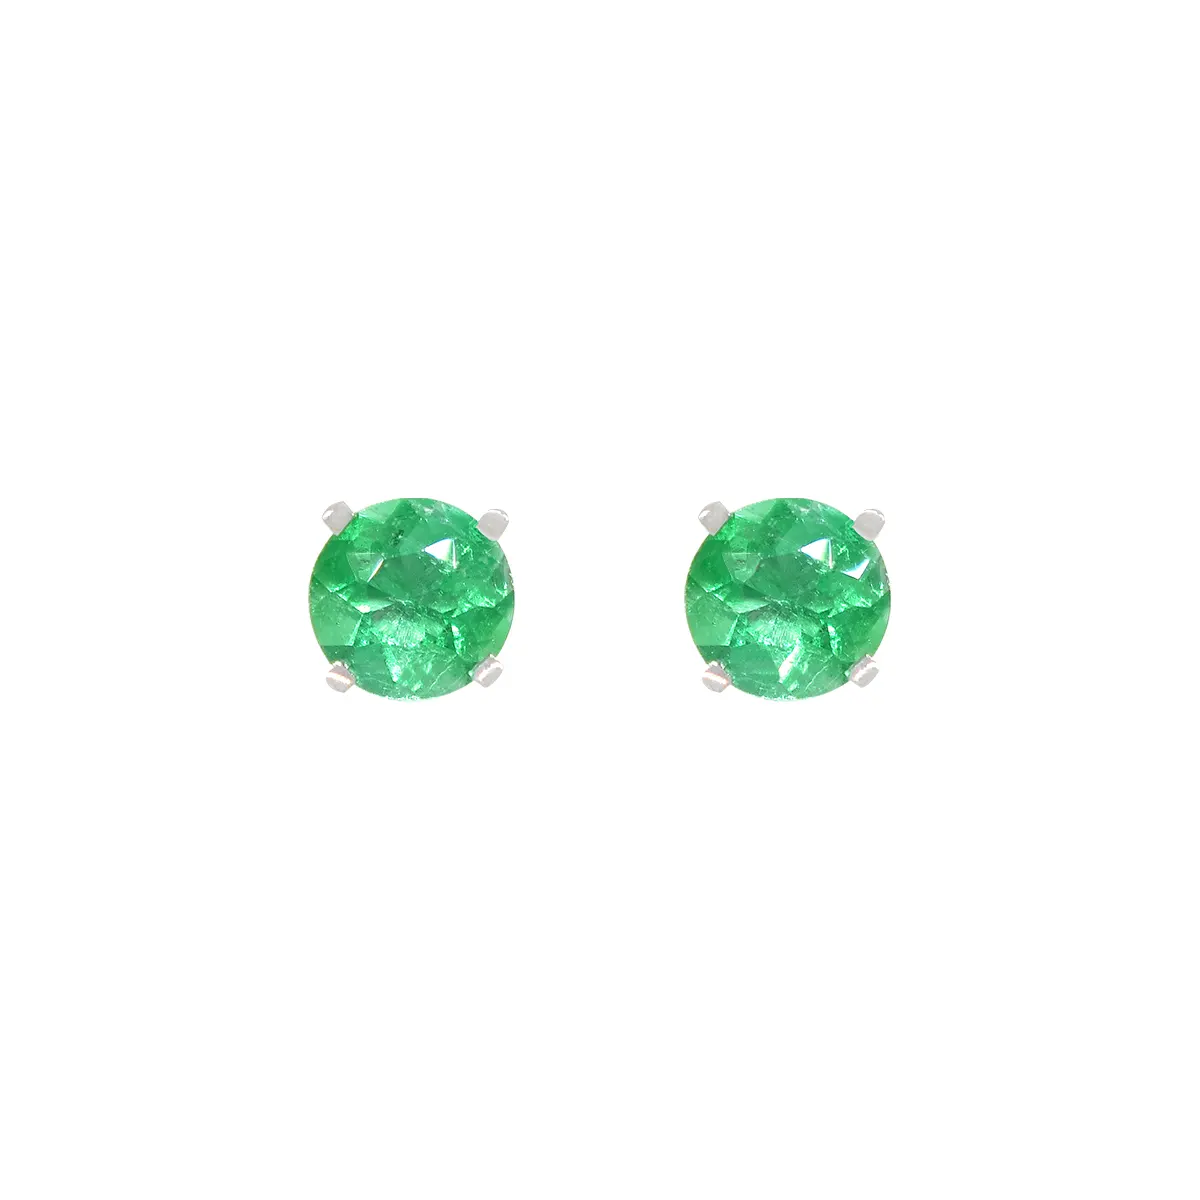 Small Emerald Stud Earrings in 18K White Gold